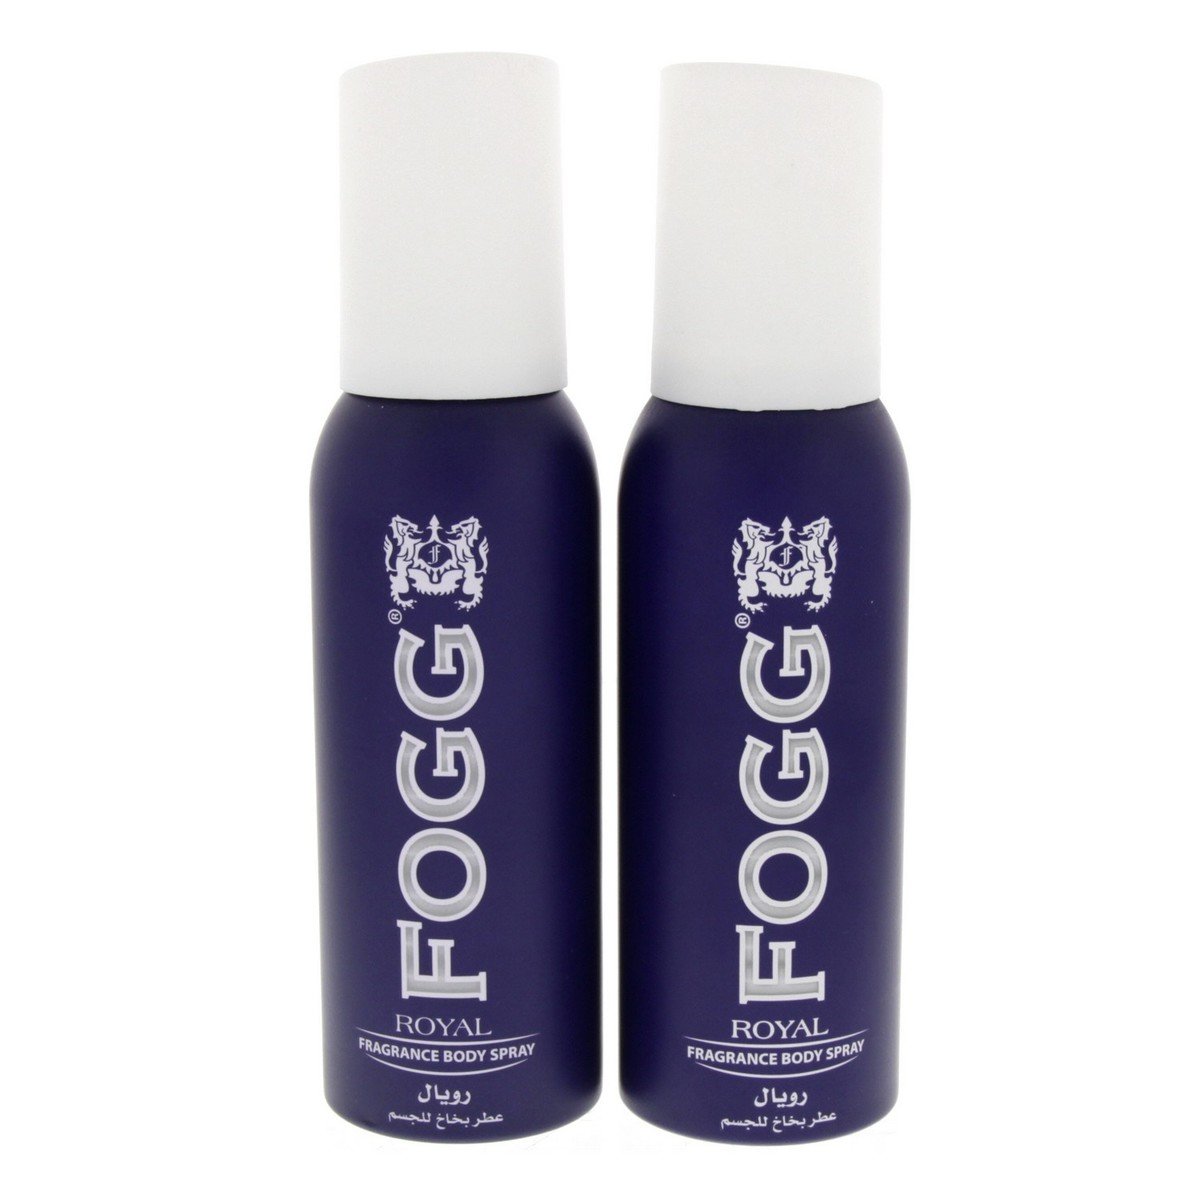 Fogg Fragrance Body Spray For Men Royal 2 x 120ml